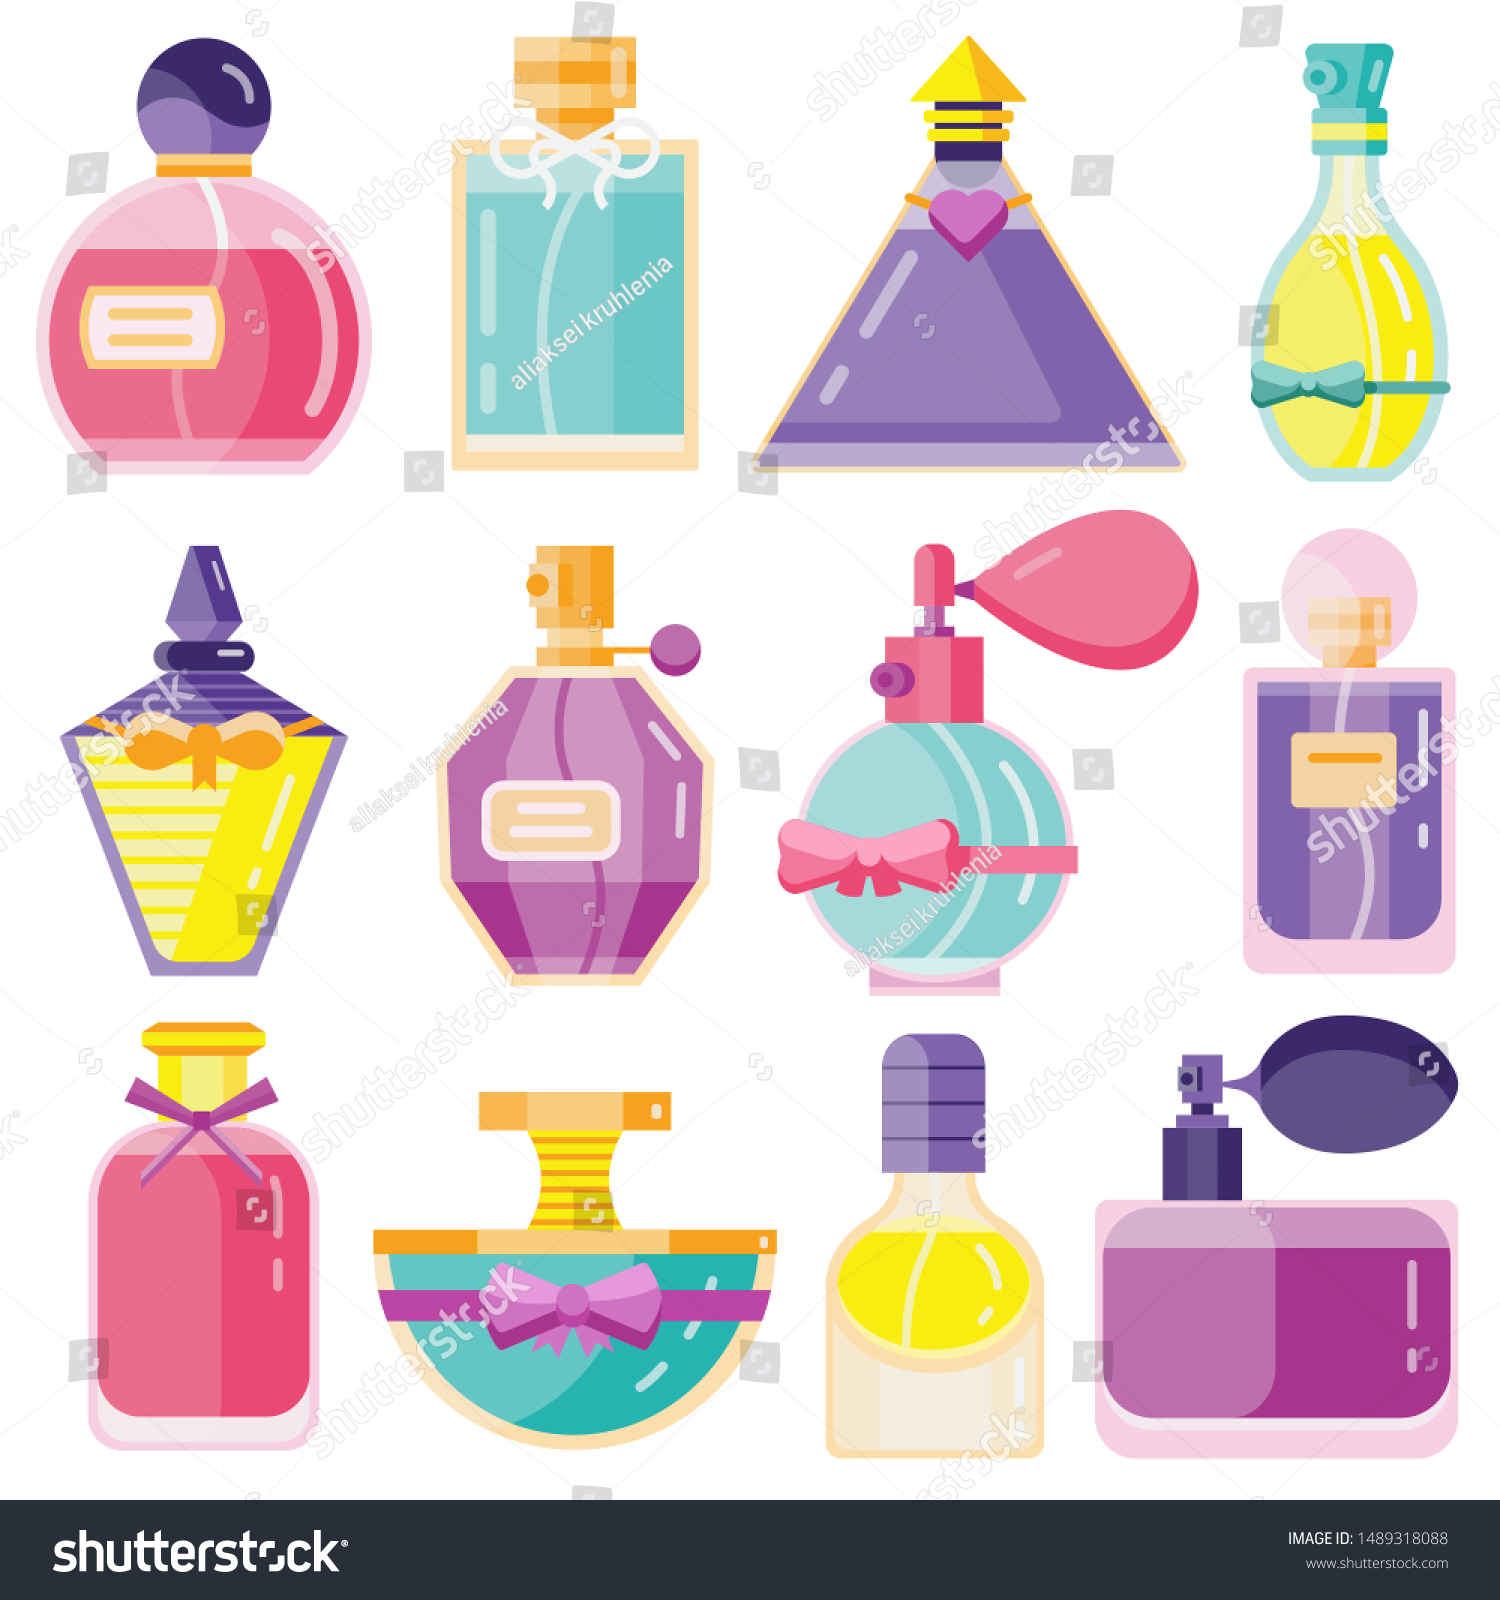 15,852 Perfume cartoon Images, Stock Photos & Vectors | Shutterstock